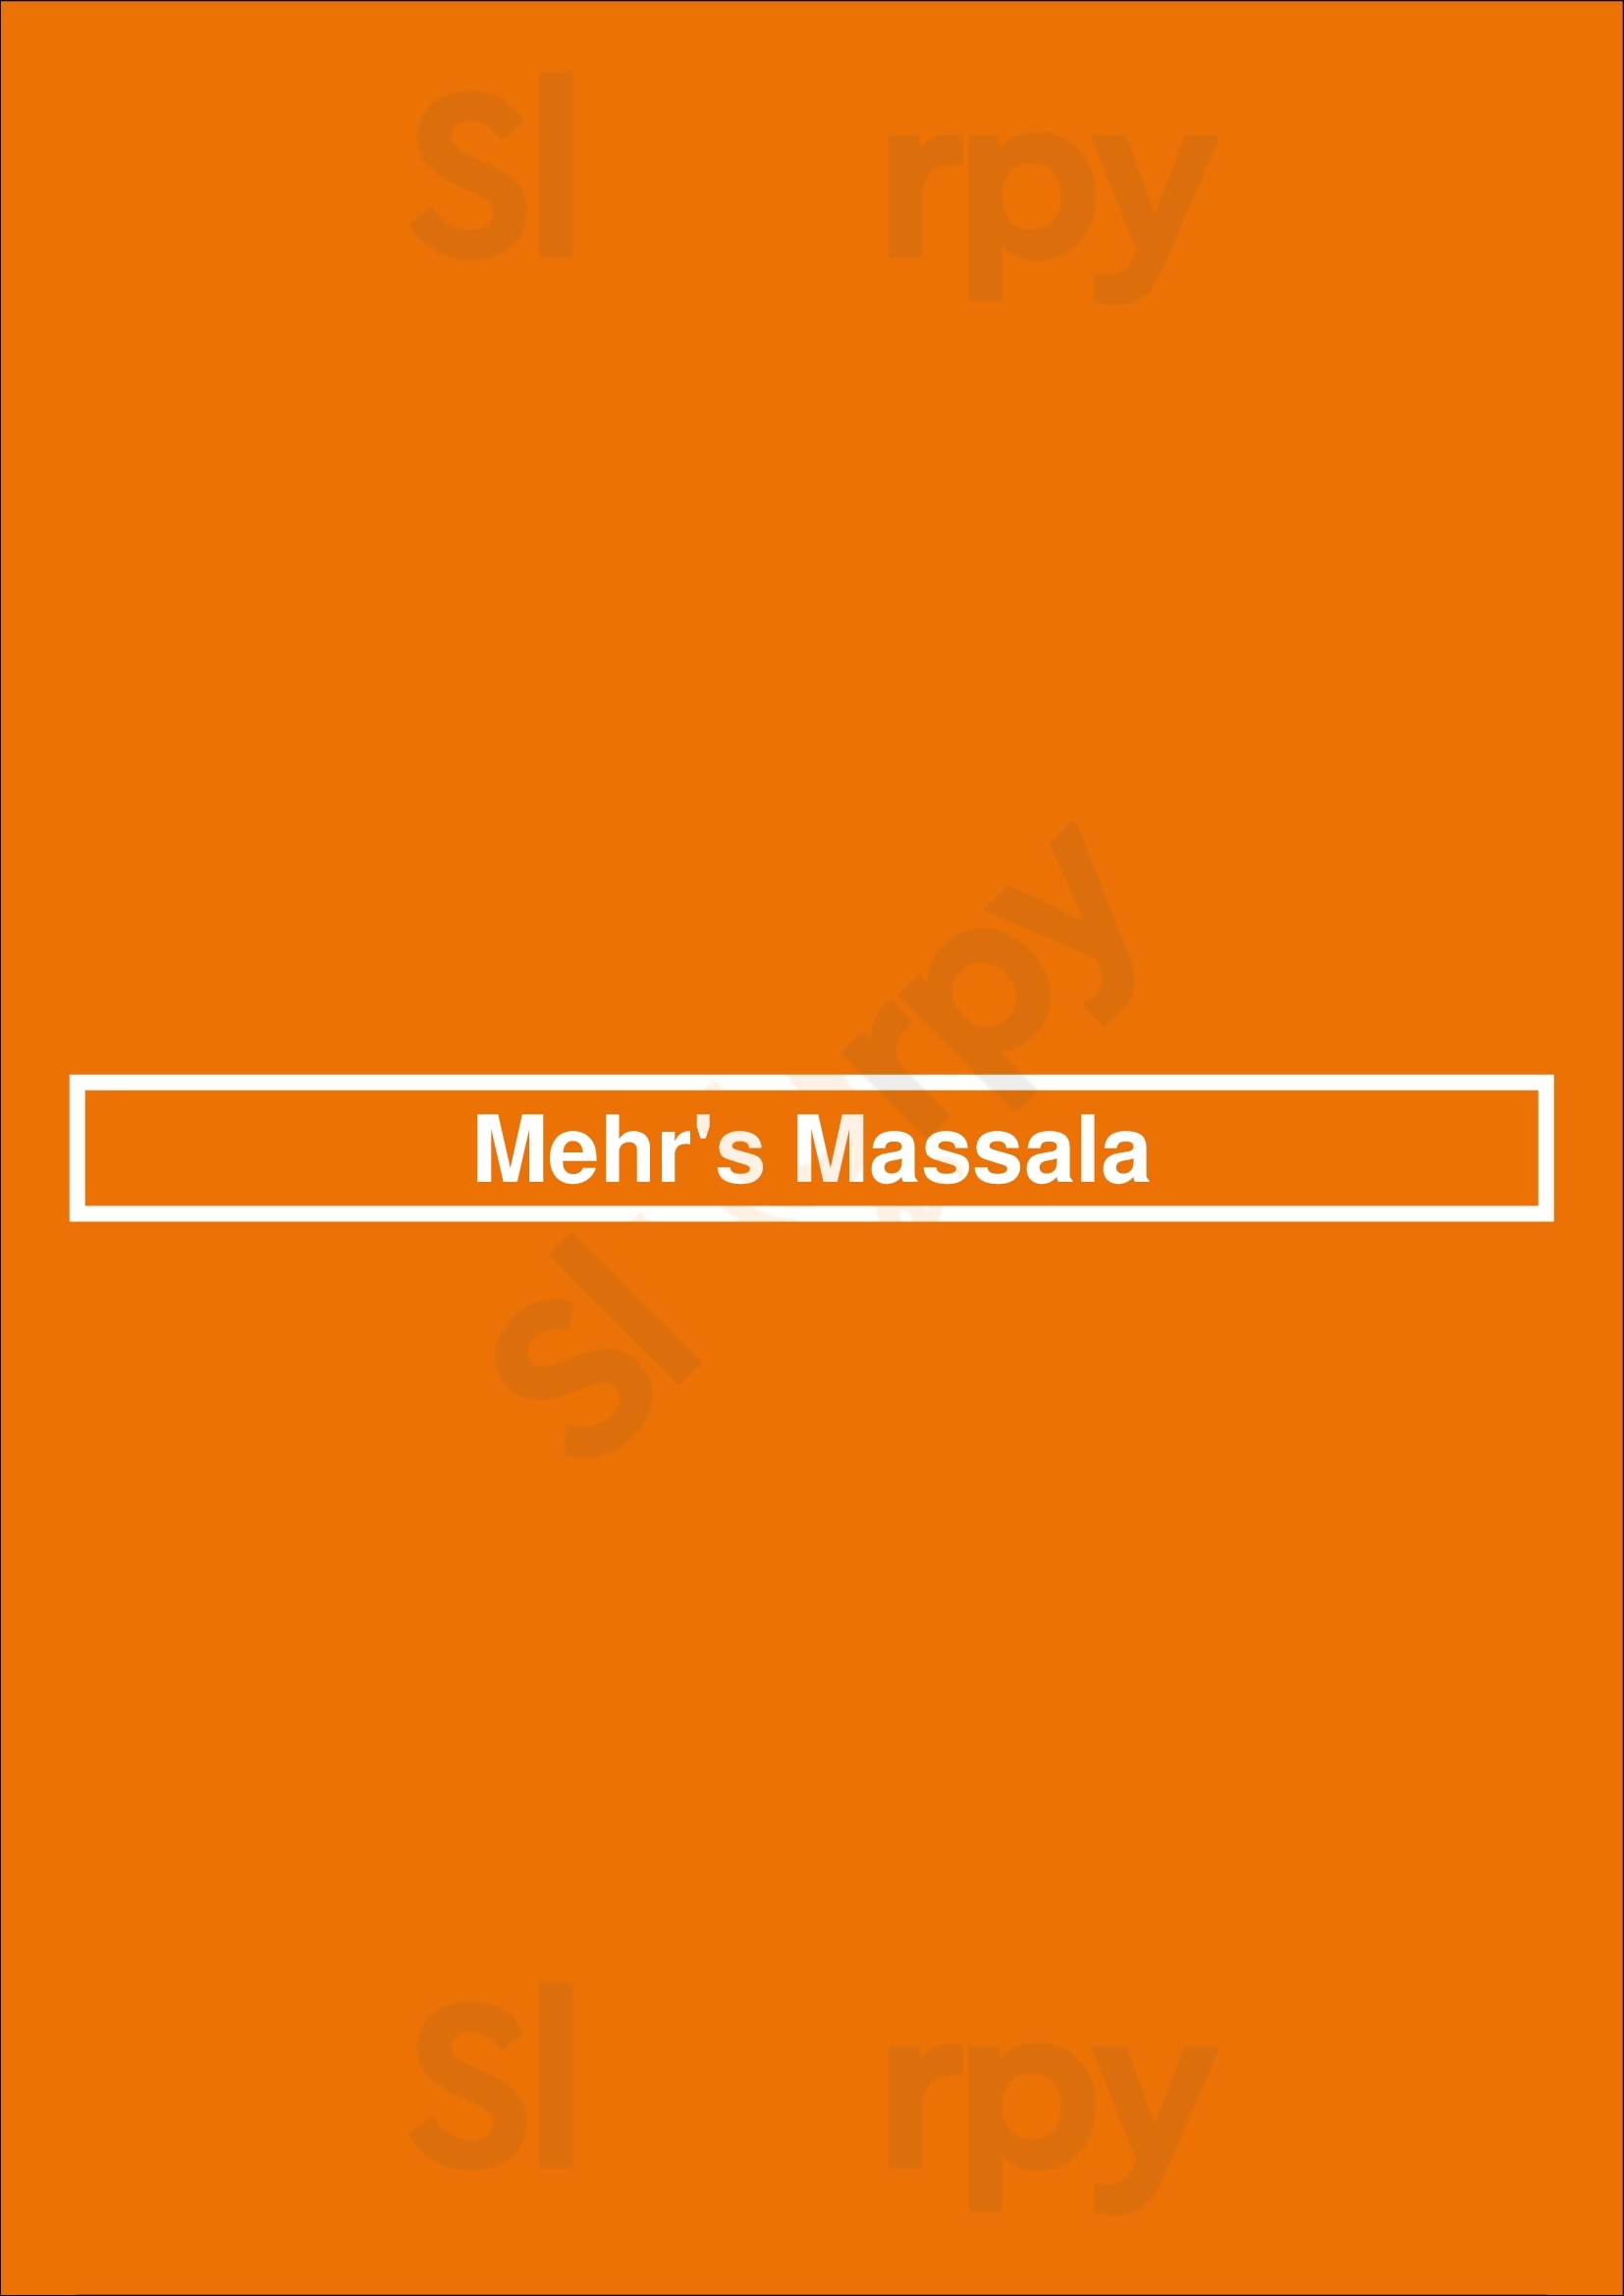 Mehr's Massala Rotherham Menu - 1